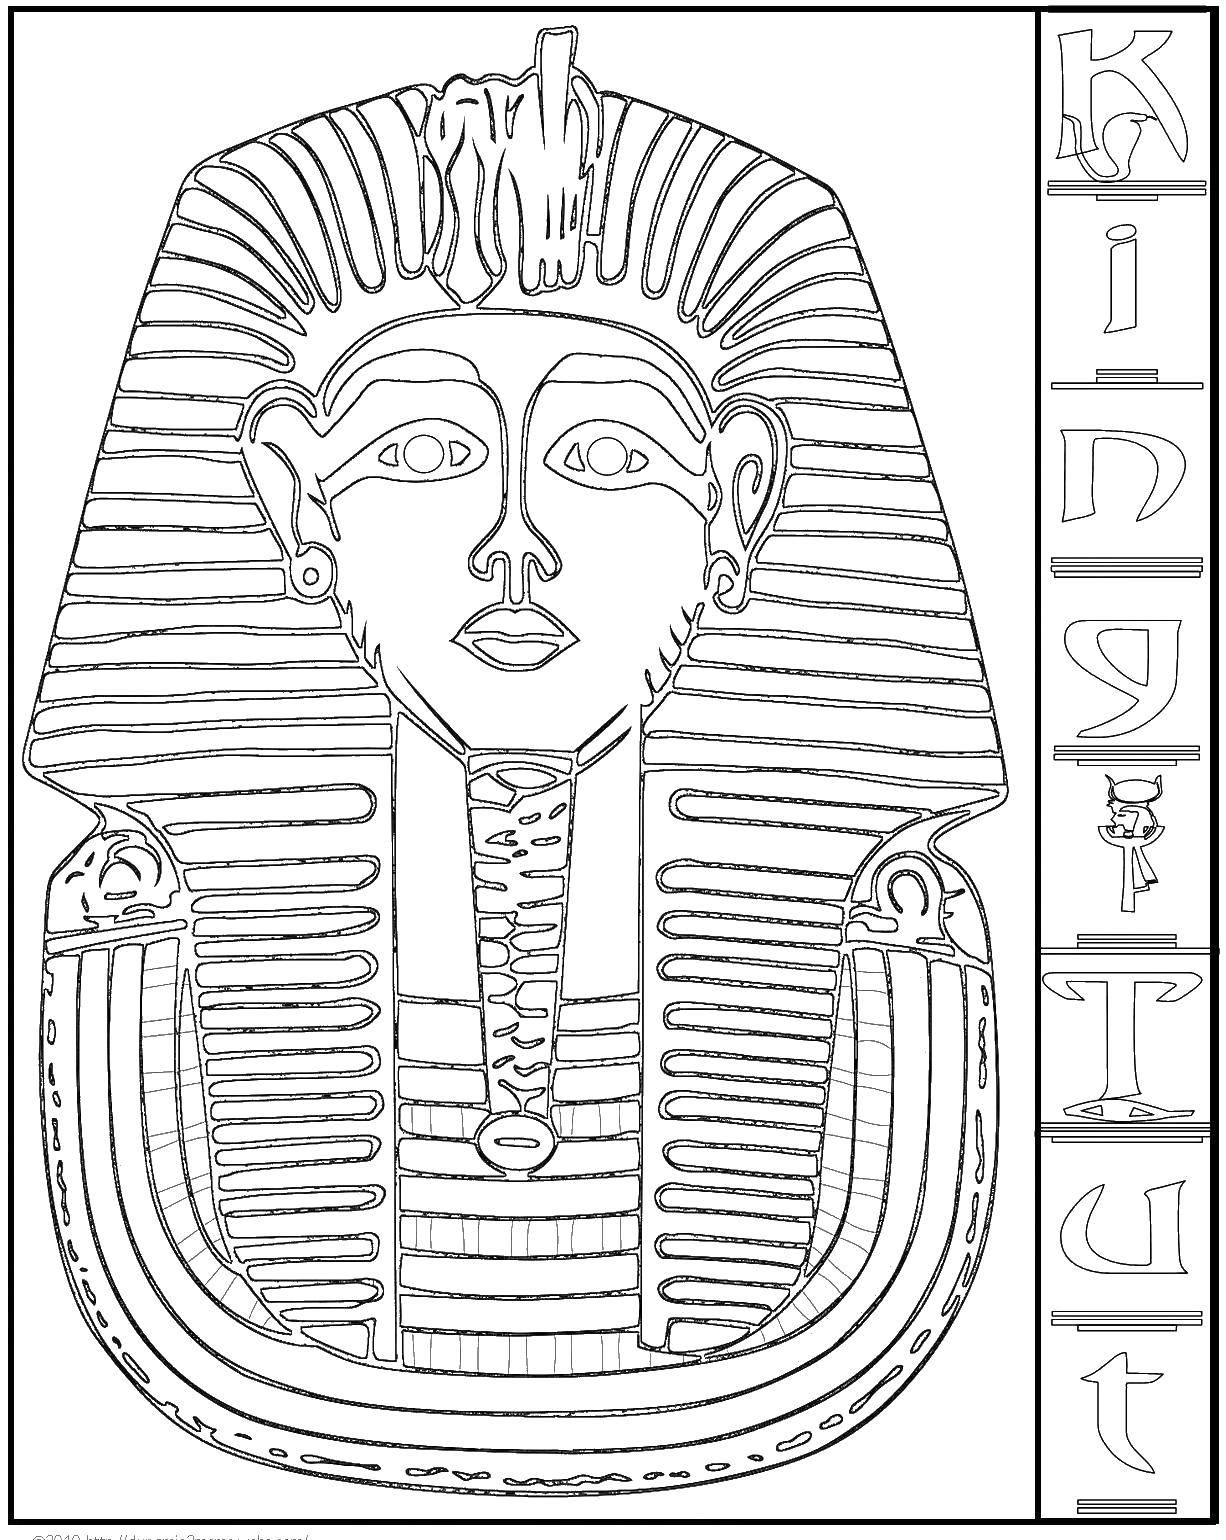 Название: Раскраска Фараон и египетские иероглифы. Категория: Египет. Теги: Египет, фараон, иероглифы.